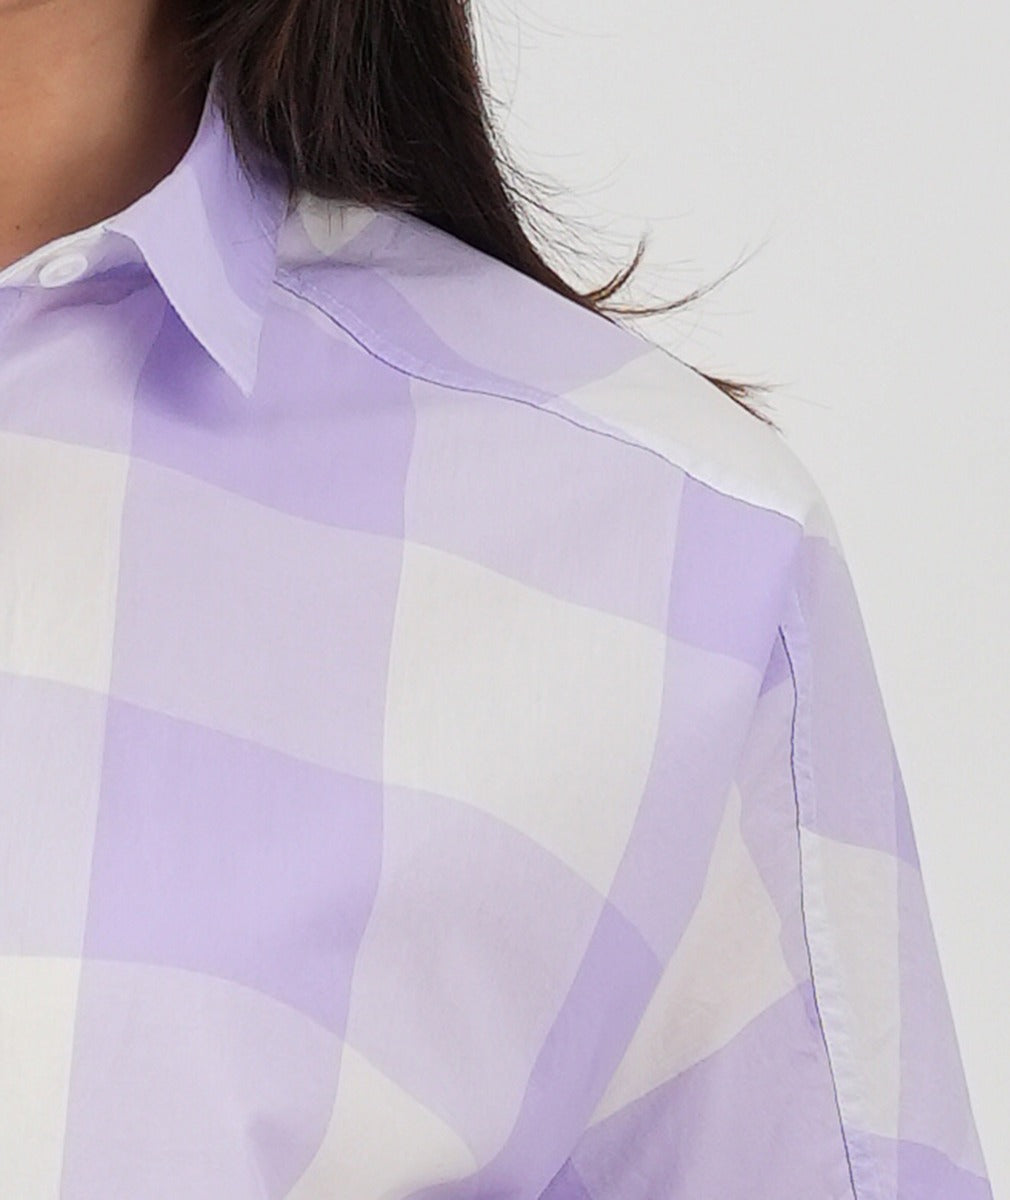 Manaia Short Sleeve Shirt | Lavender Check